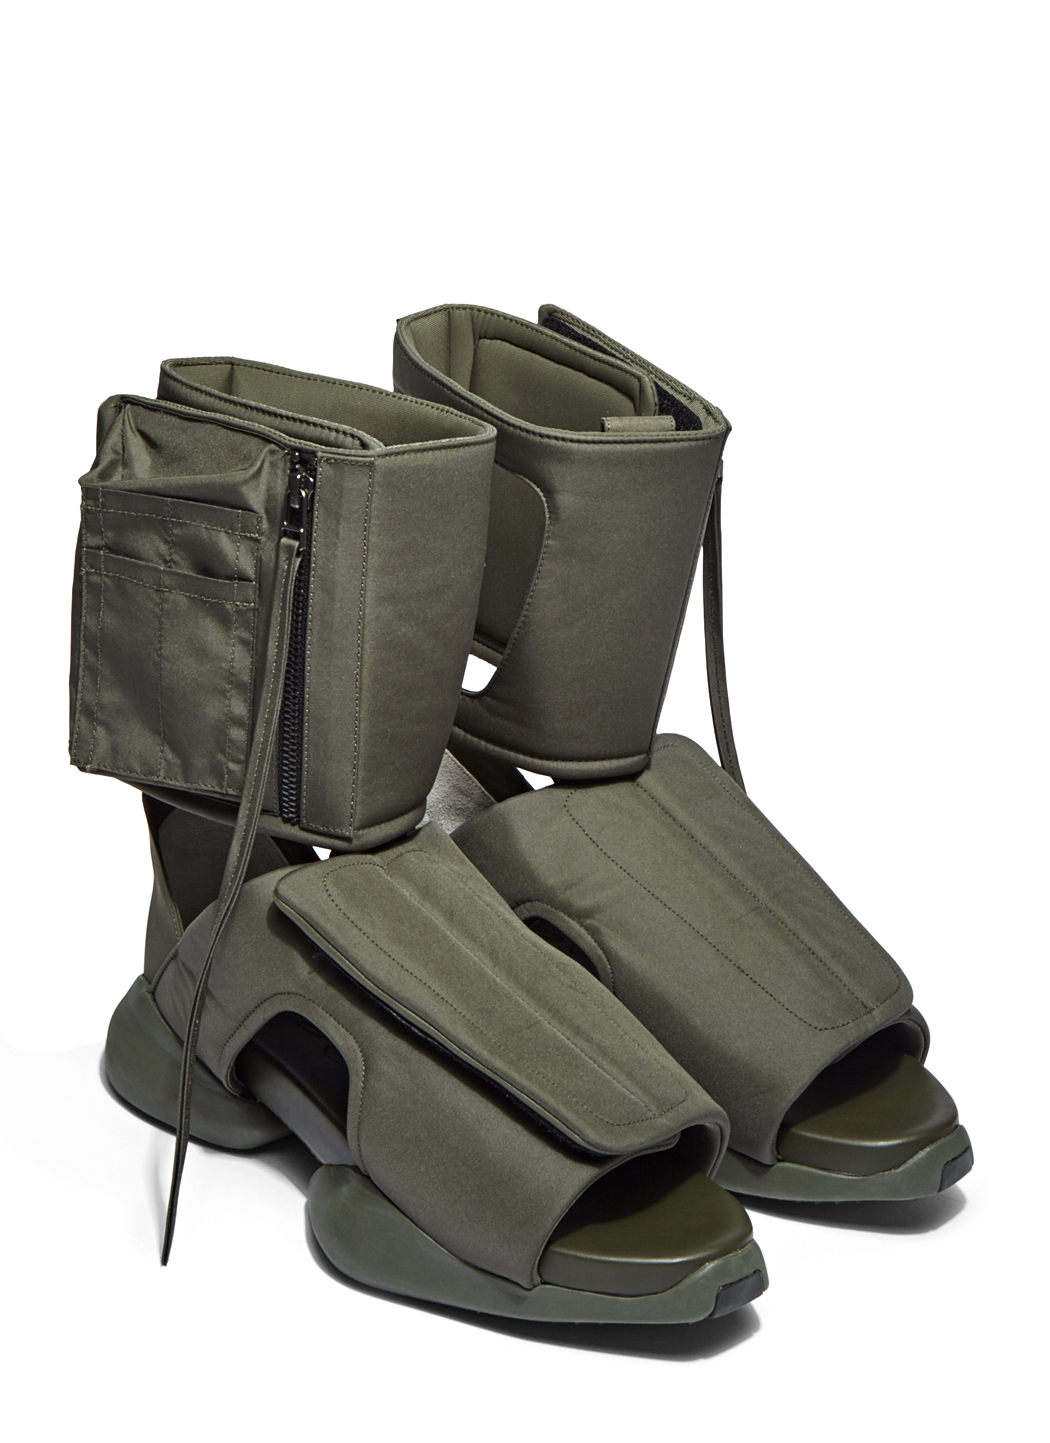 rick-owens-khaki-x-adidas-mens-velcro-strap-ro-cargo-sandals-in-khaki-product-7-323571649-normal.jpeg —